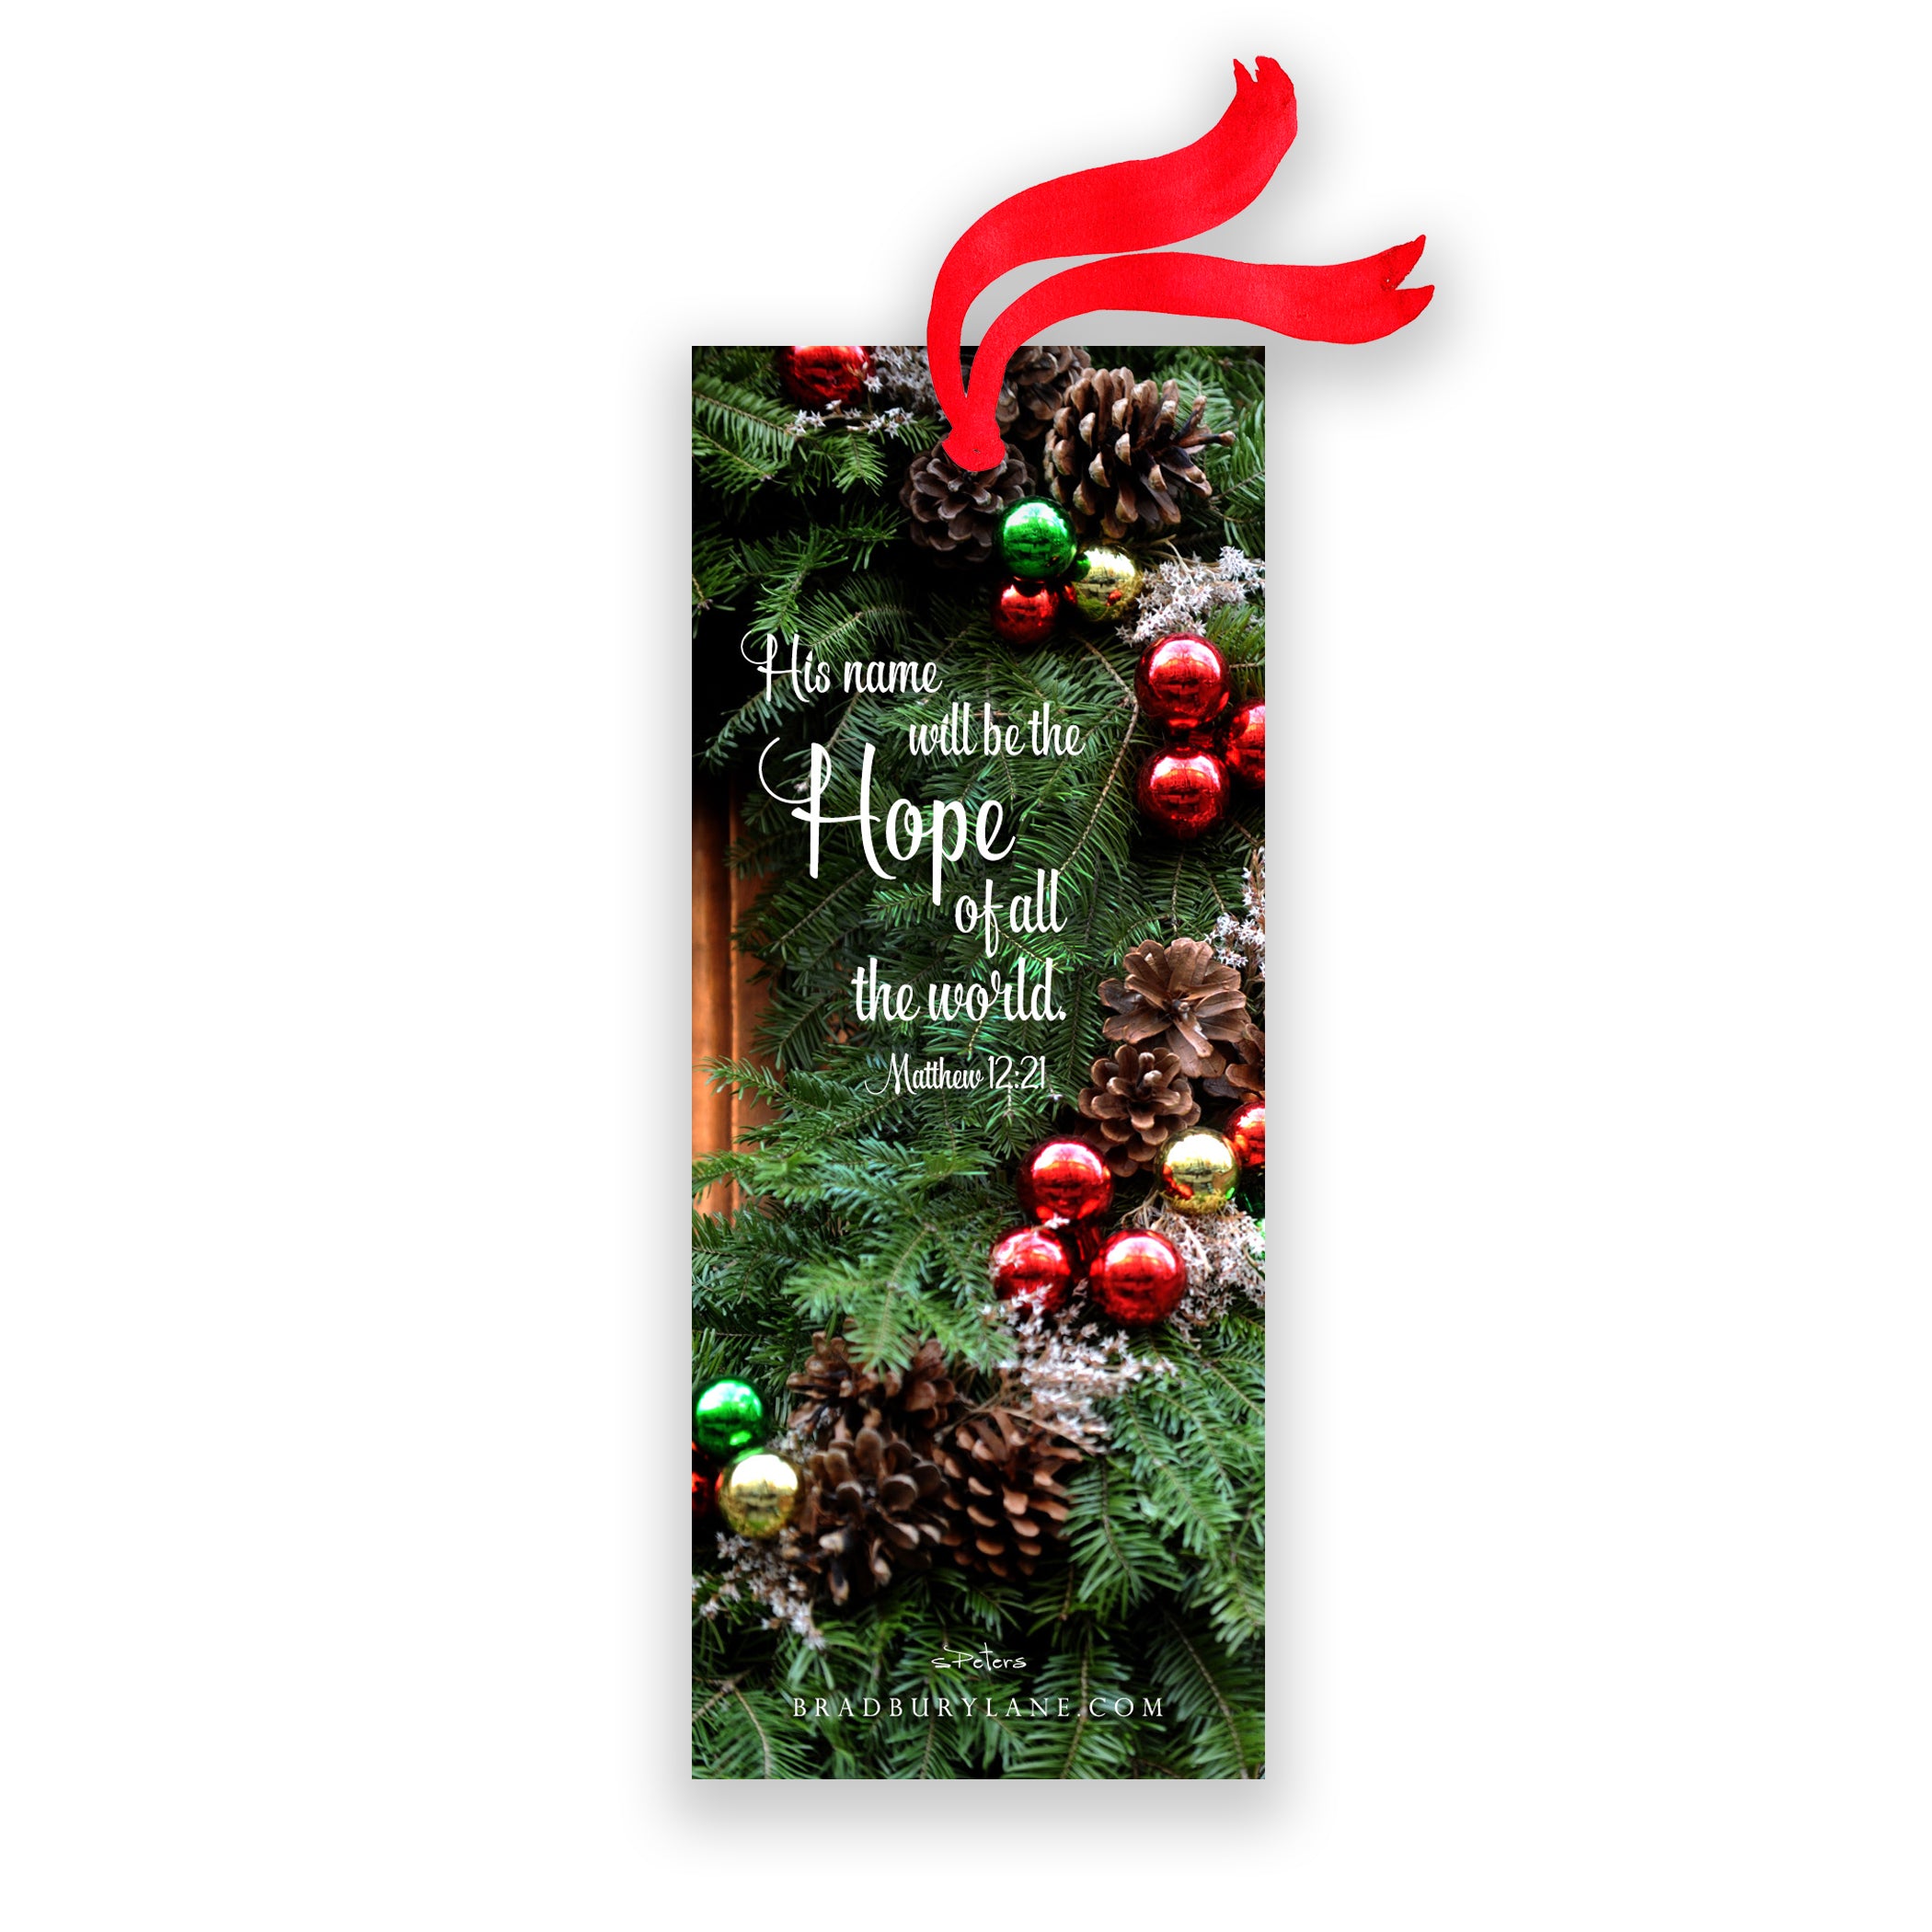 Christmas in the City (Matthew 12:21) - Bookmark